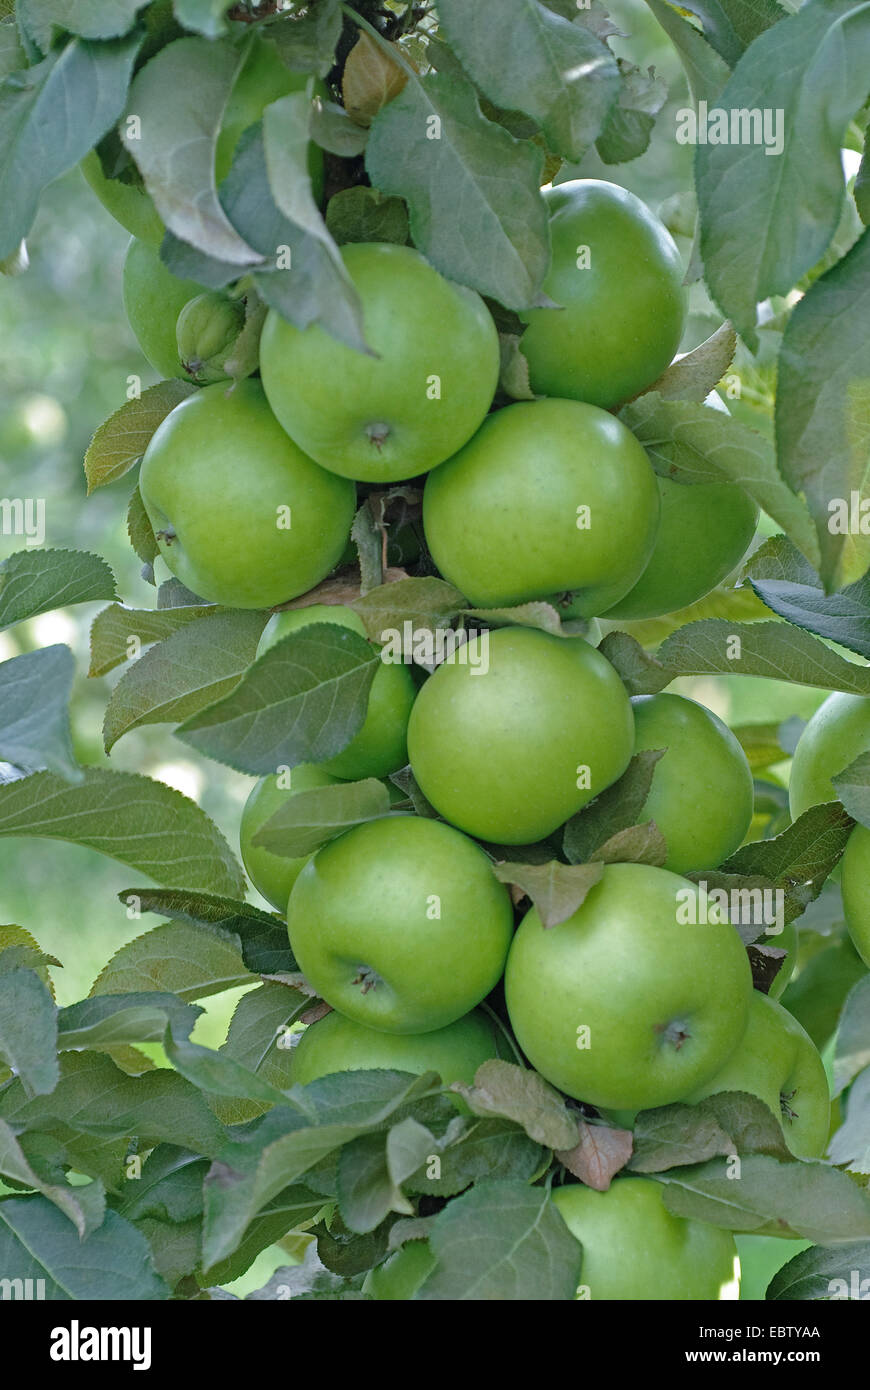 Apfelbaum (Malus Domestica "Greencats", Malus Domestica Greencats), Sorte Greencats, Äpfel auf dem Baum Stockfoto